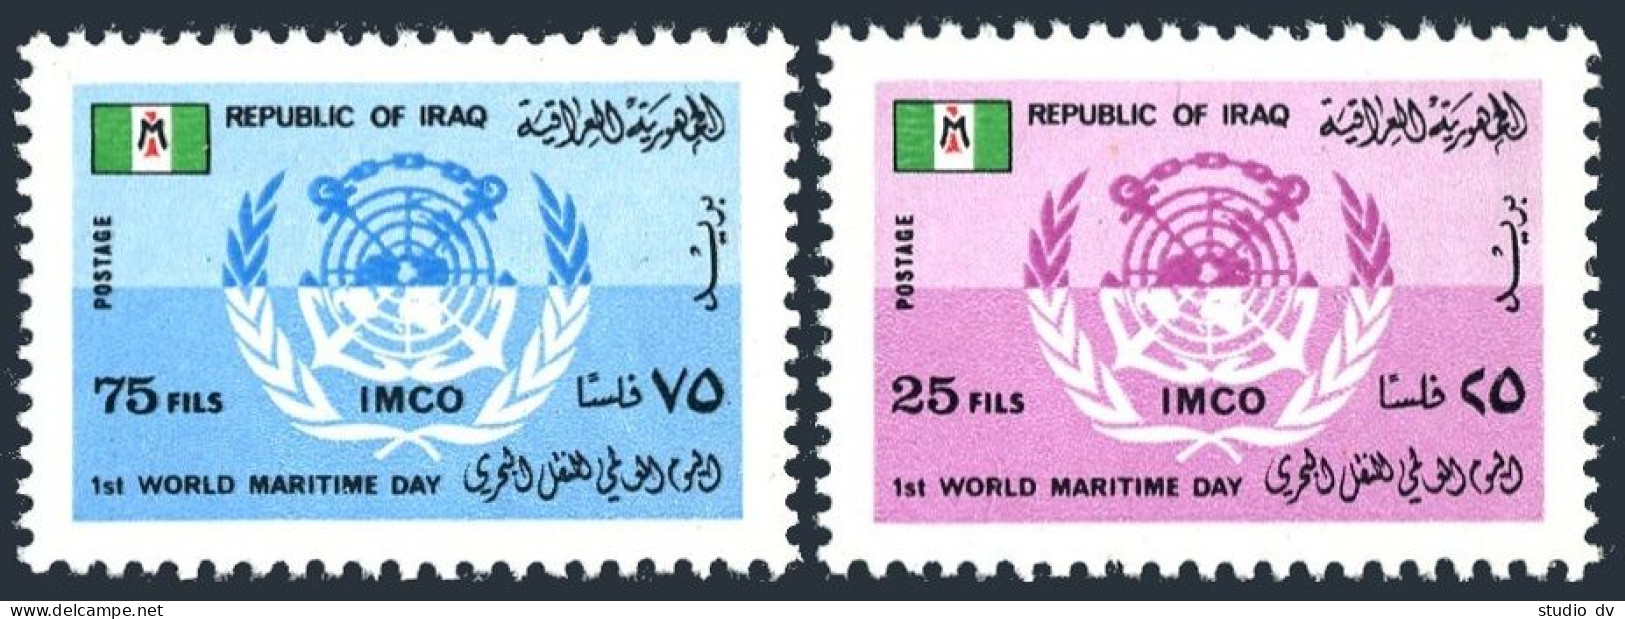 Iraq 860-861, MNH. Michel 959-960. 1st World Maritime Day, 1978. IMCO Emblem. - Iraq